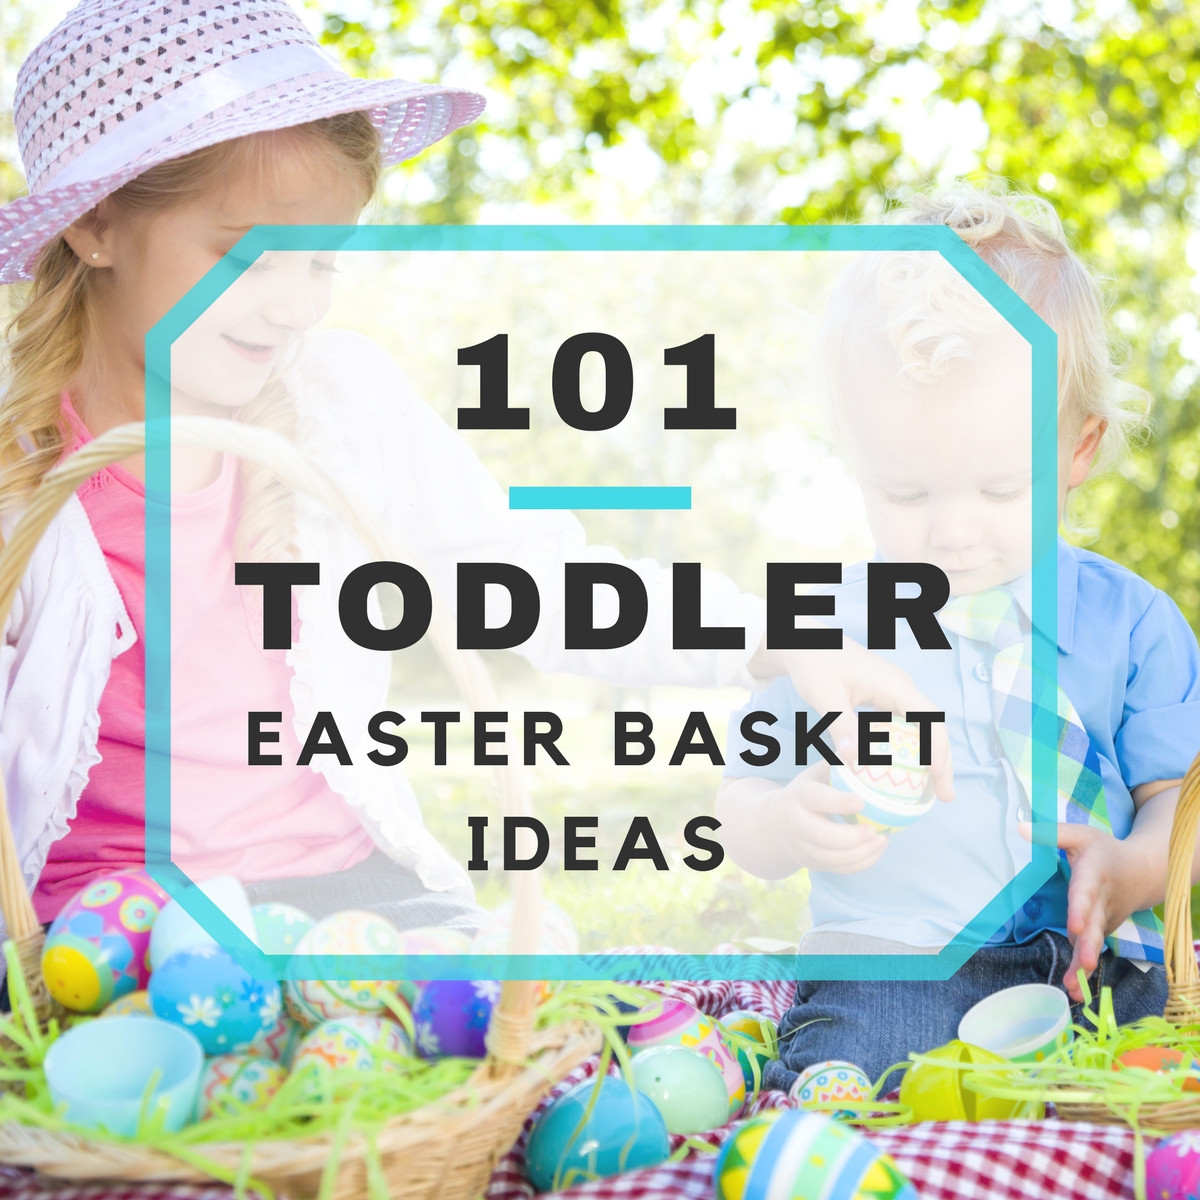 Toddler Easter Party Ideas
 101 Toddler Easter Basket Ideas